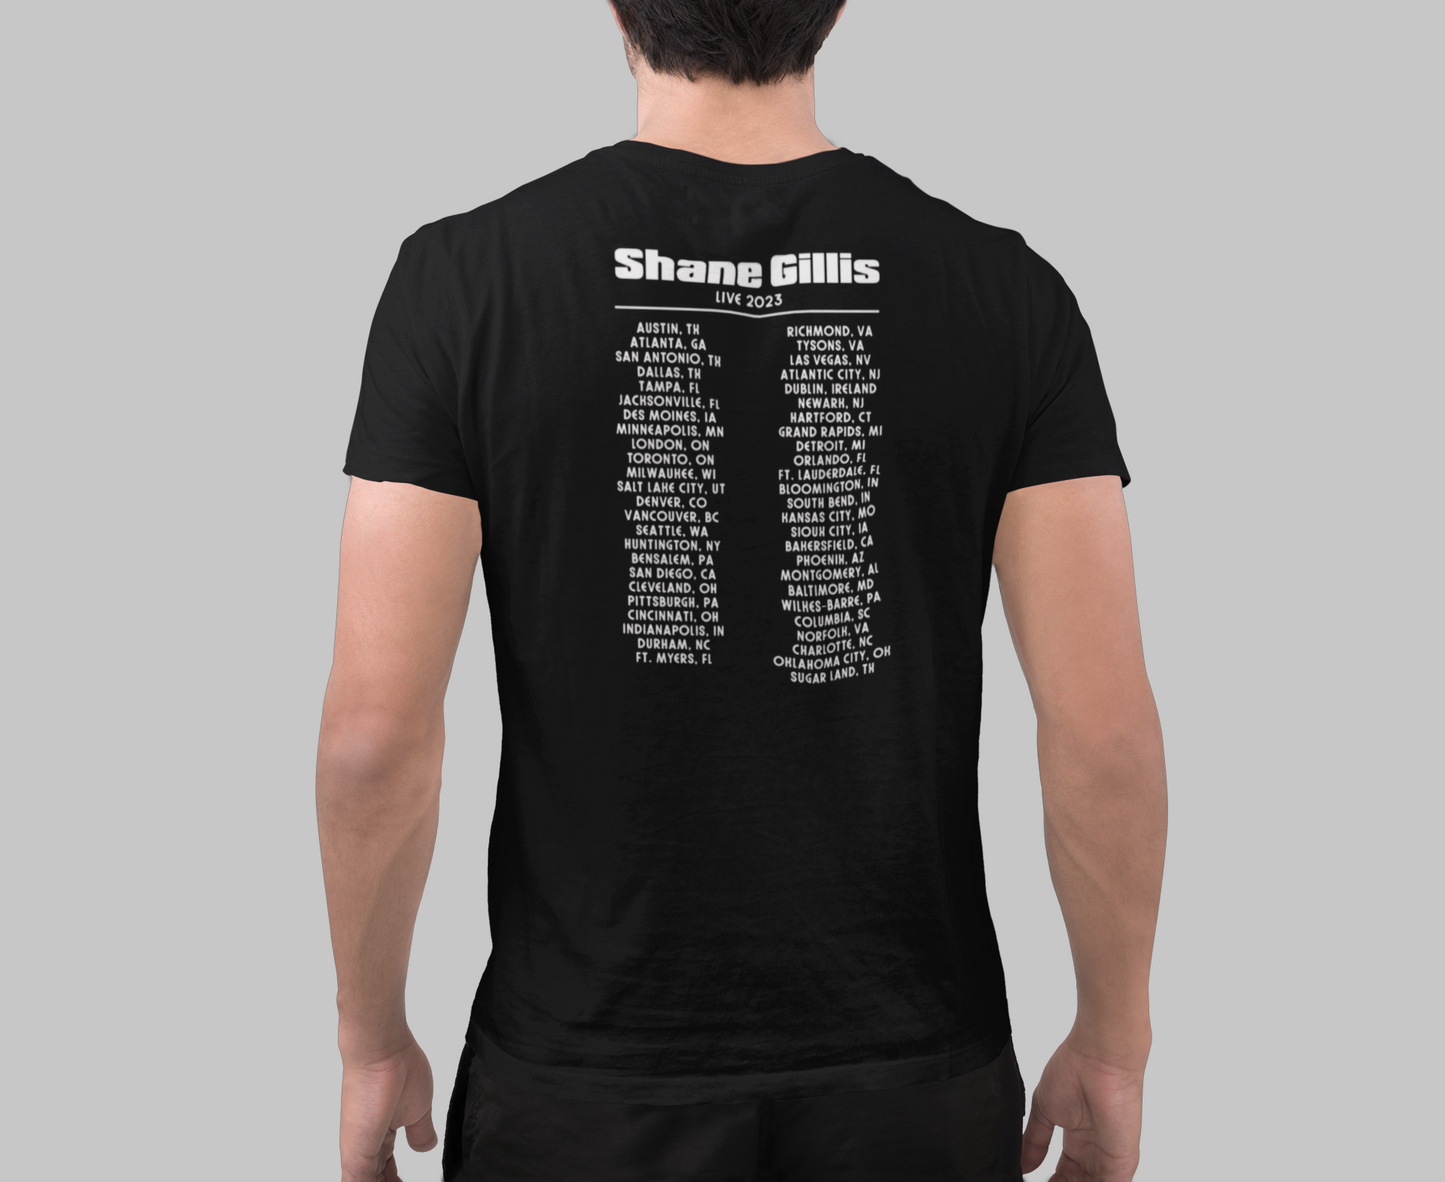 Shane Gillis Live 2023 Tour Tee